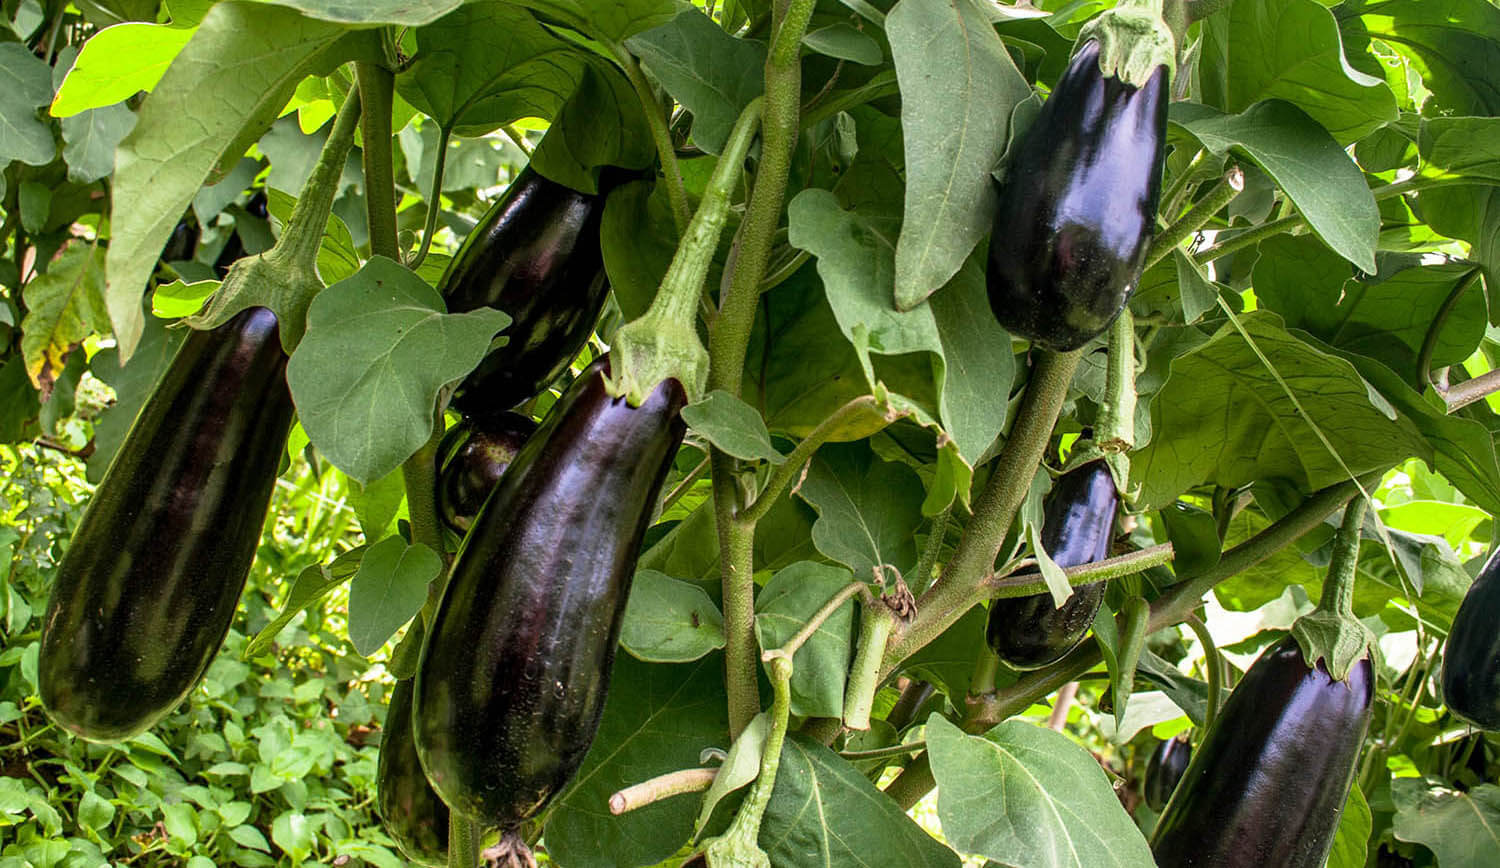 Iran Eggplant farm background